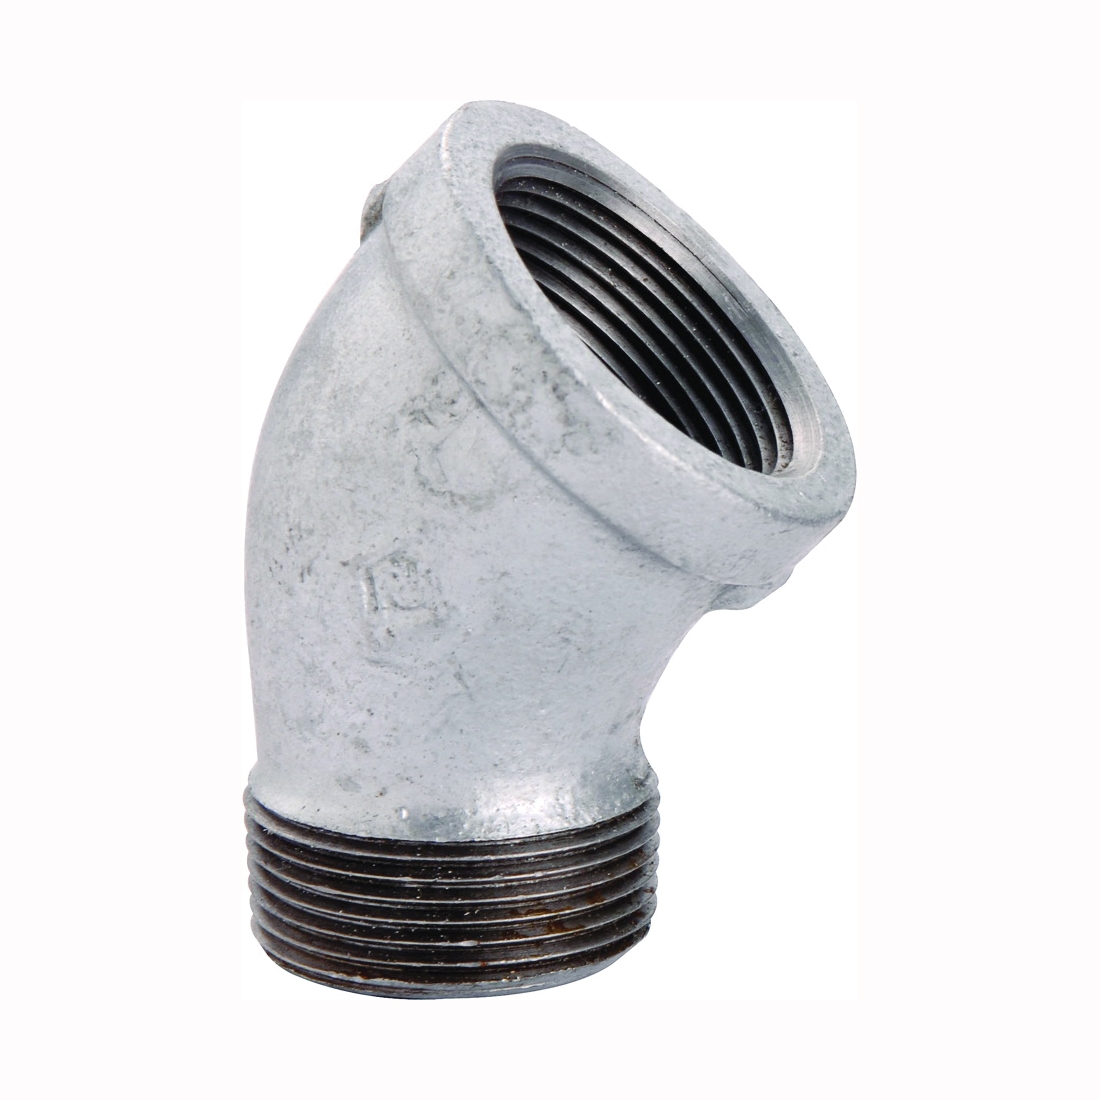 Worldwide Sourcing PPG121-6 Street Pipe Elbow, 1/8 in, Threaded, 45 deg Angle, SCH 40 Schedule, 300 psi Pressure - 1